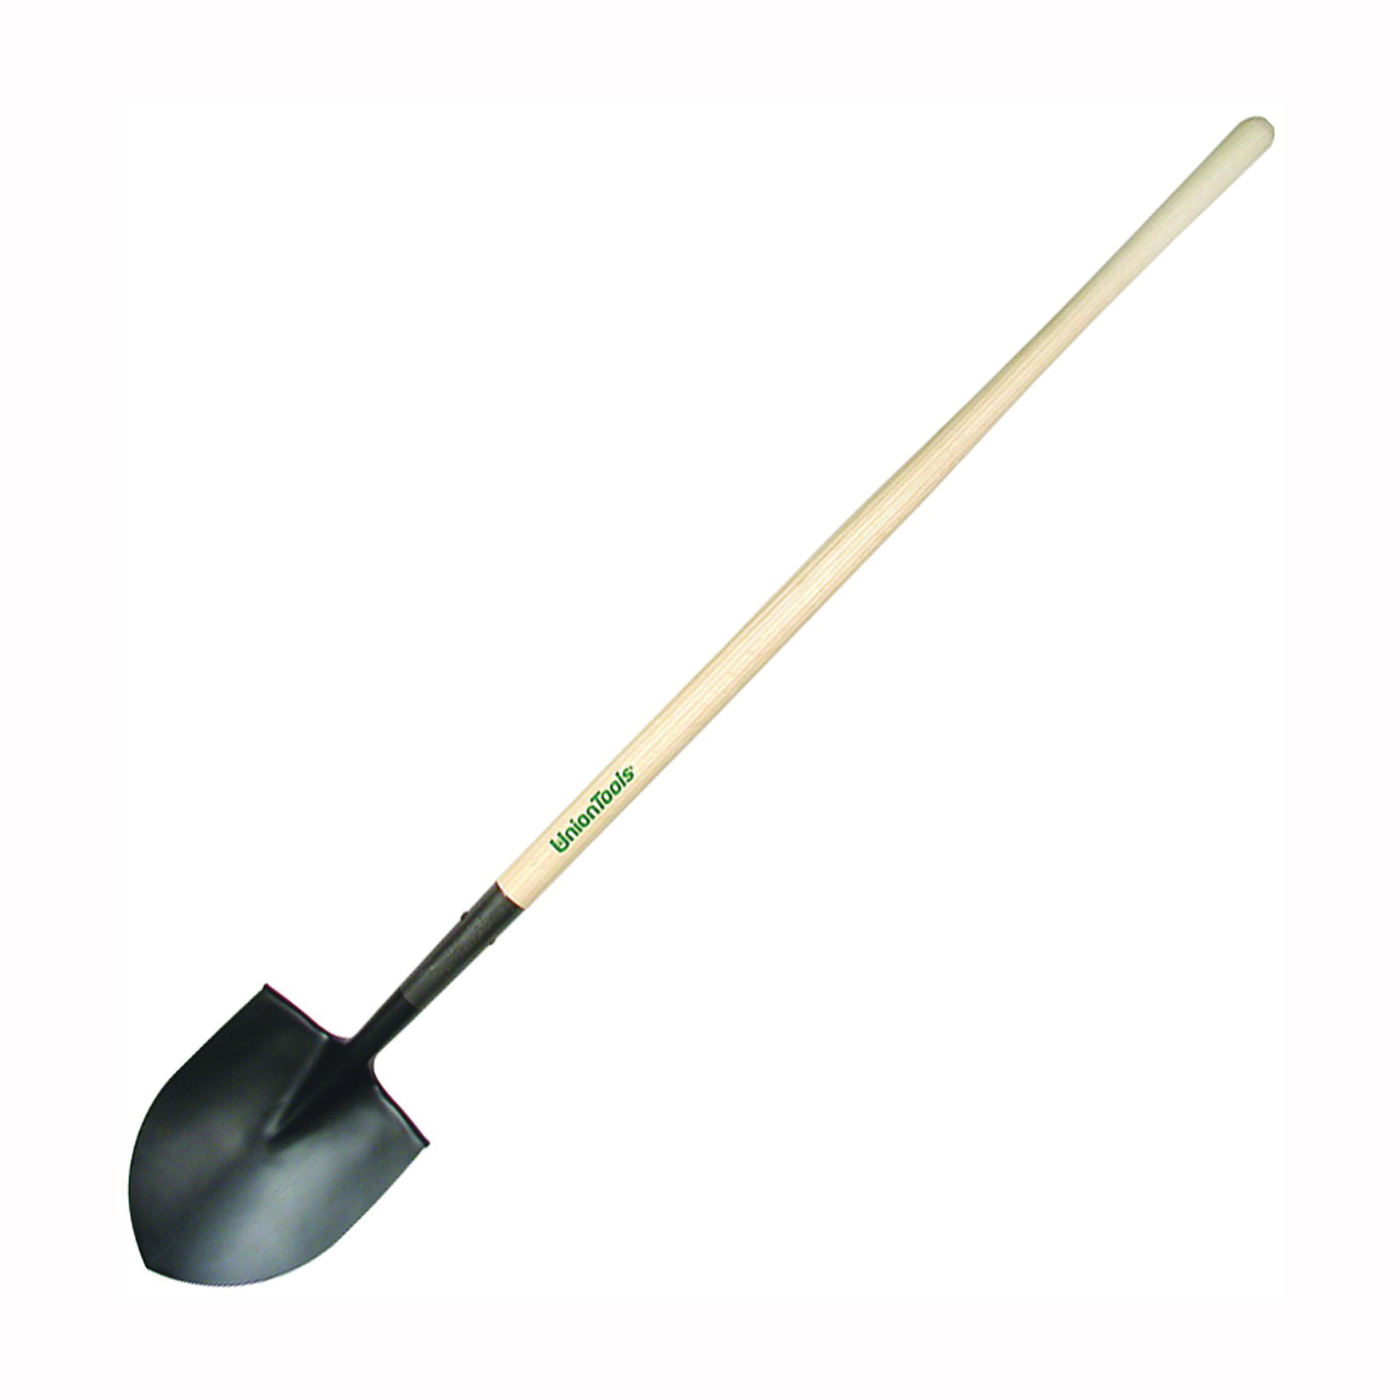 40104 Irrigation Shovel, 8-7/8 in W Blade, Steel Blade, Hardwood Handle, Long Handle, 48 in L Handle